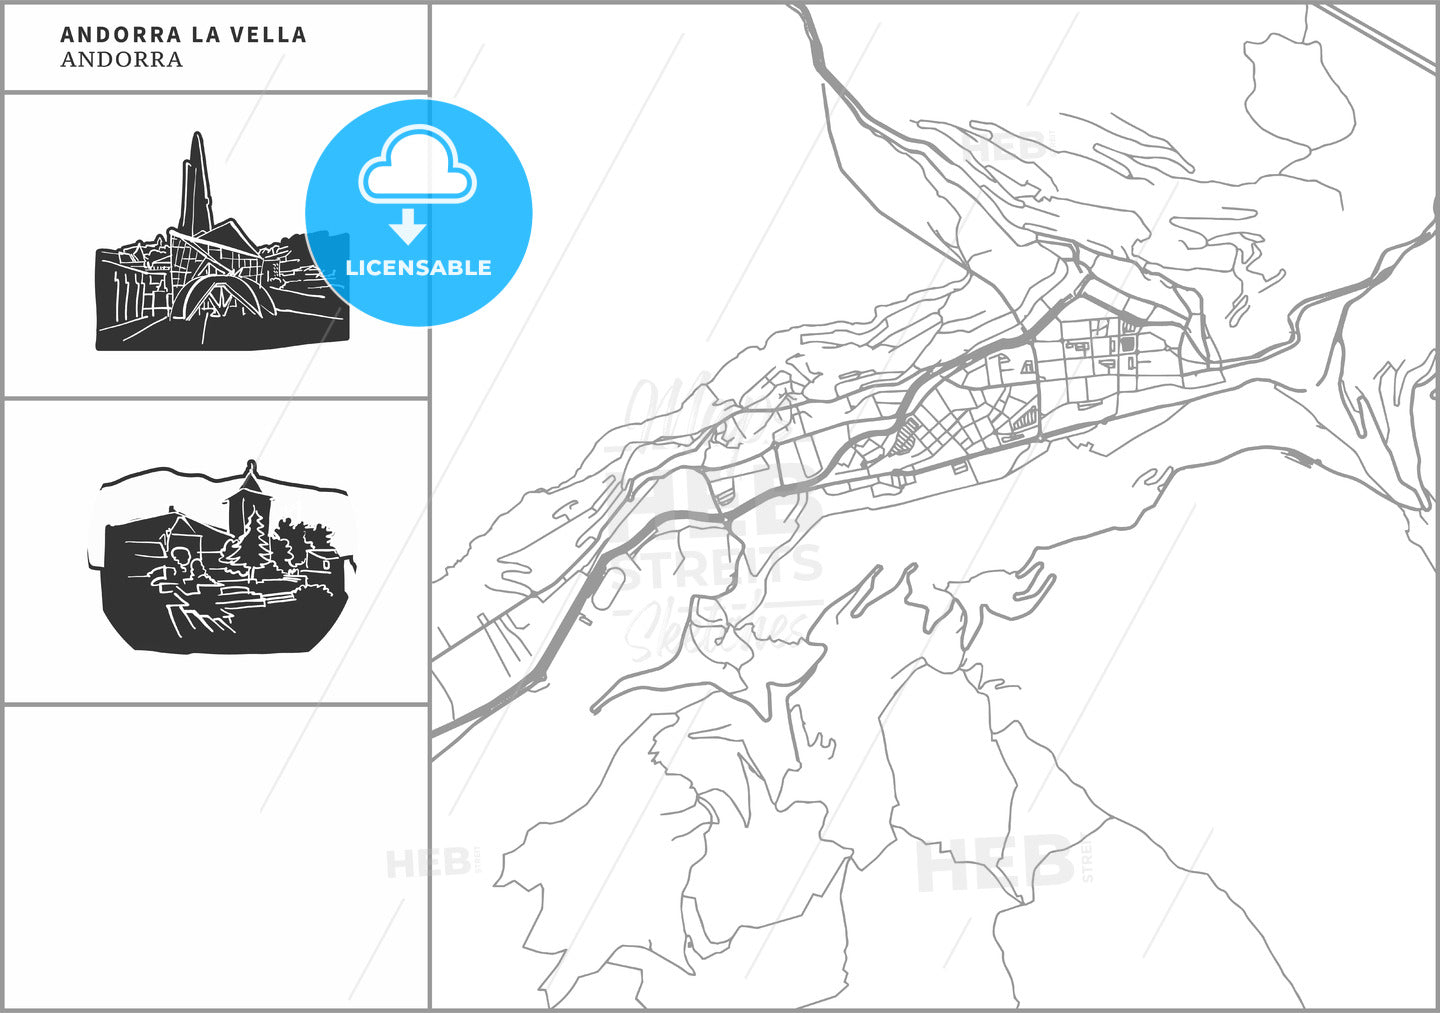 Andorra la Vella city map with hand-drawn architecture icons